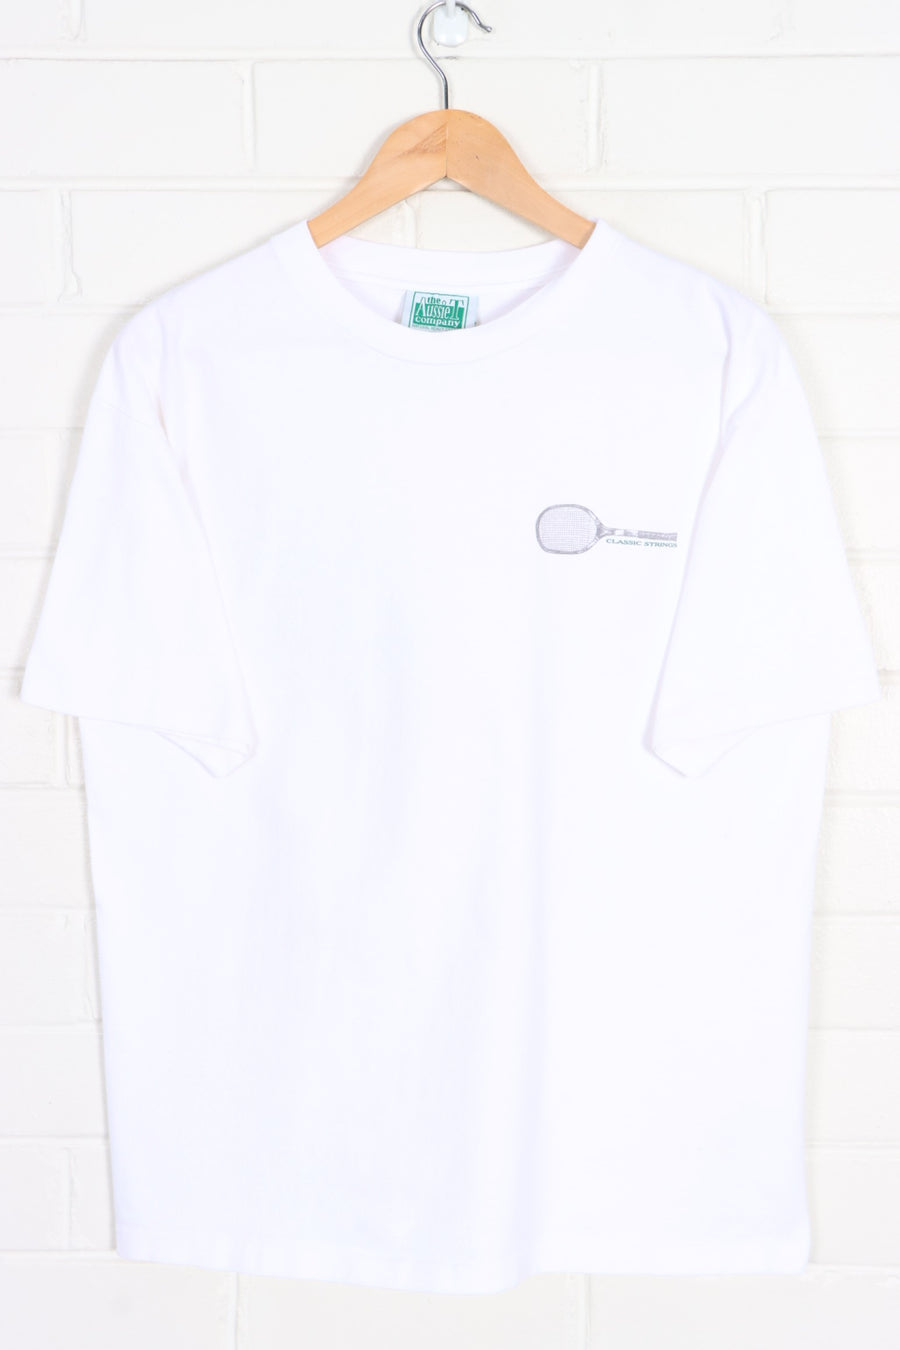 Tennis Racquet "Classic Strings" Evolution Single Stitch 90s T-Shirt USA Made (M-L)